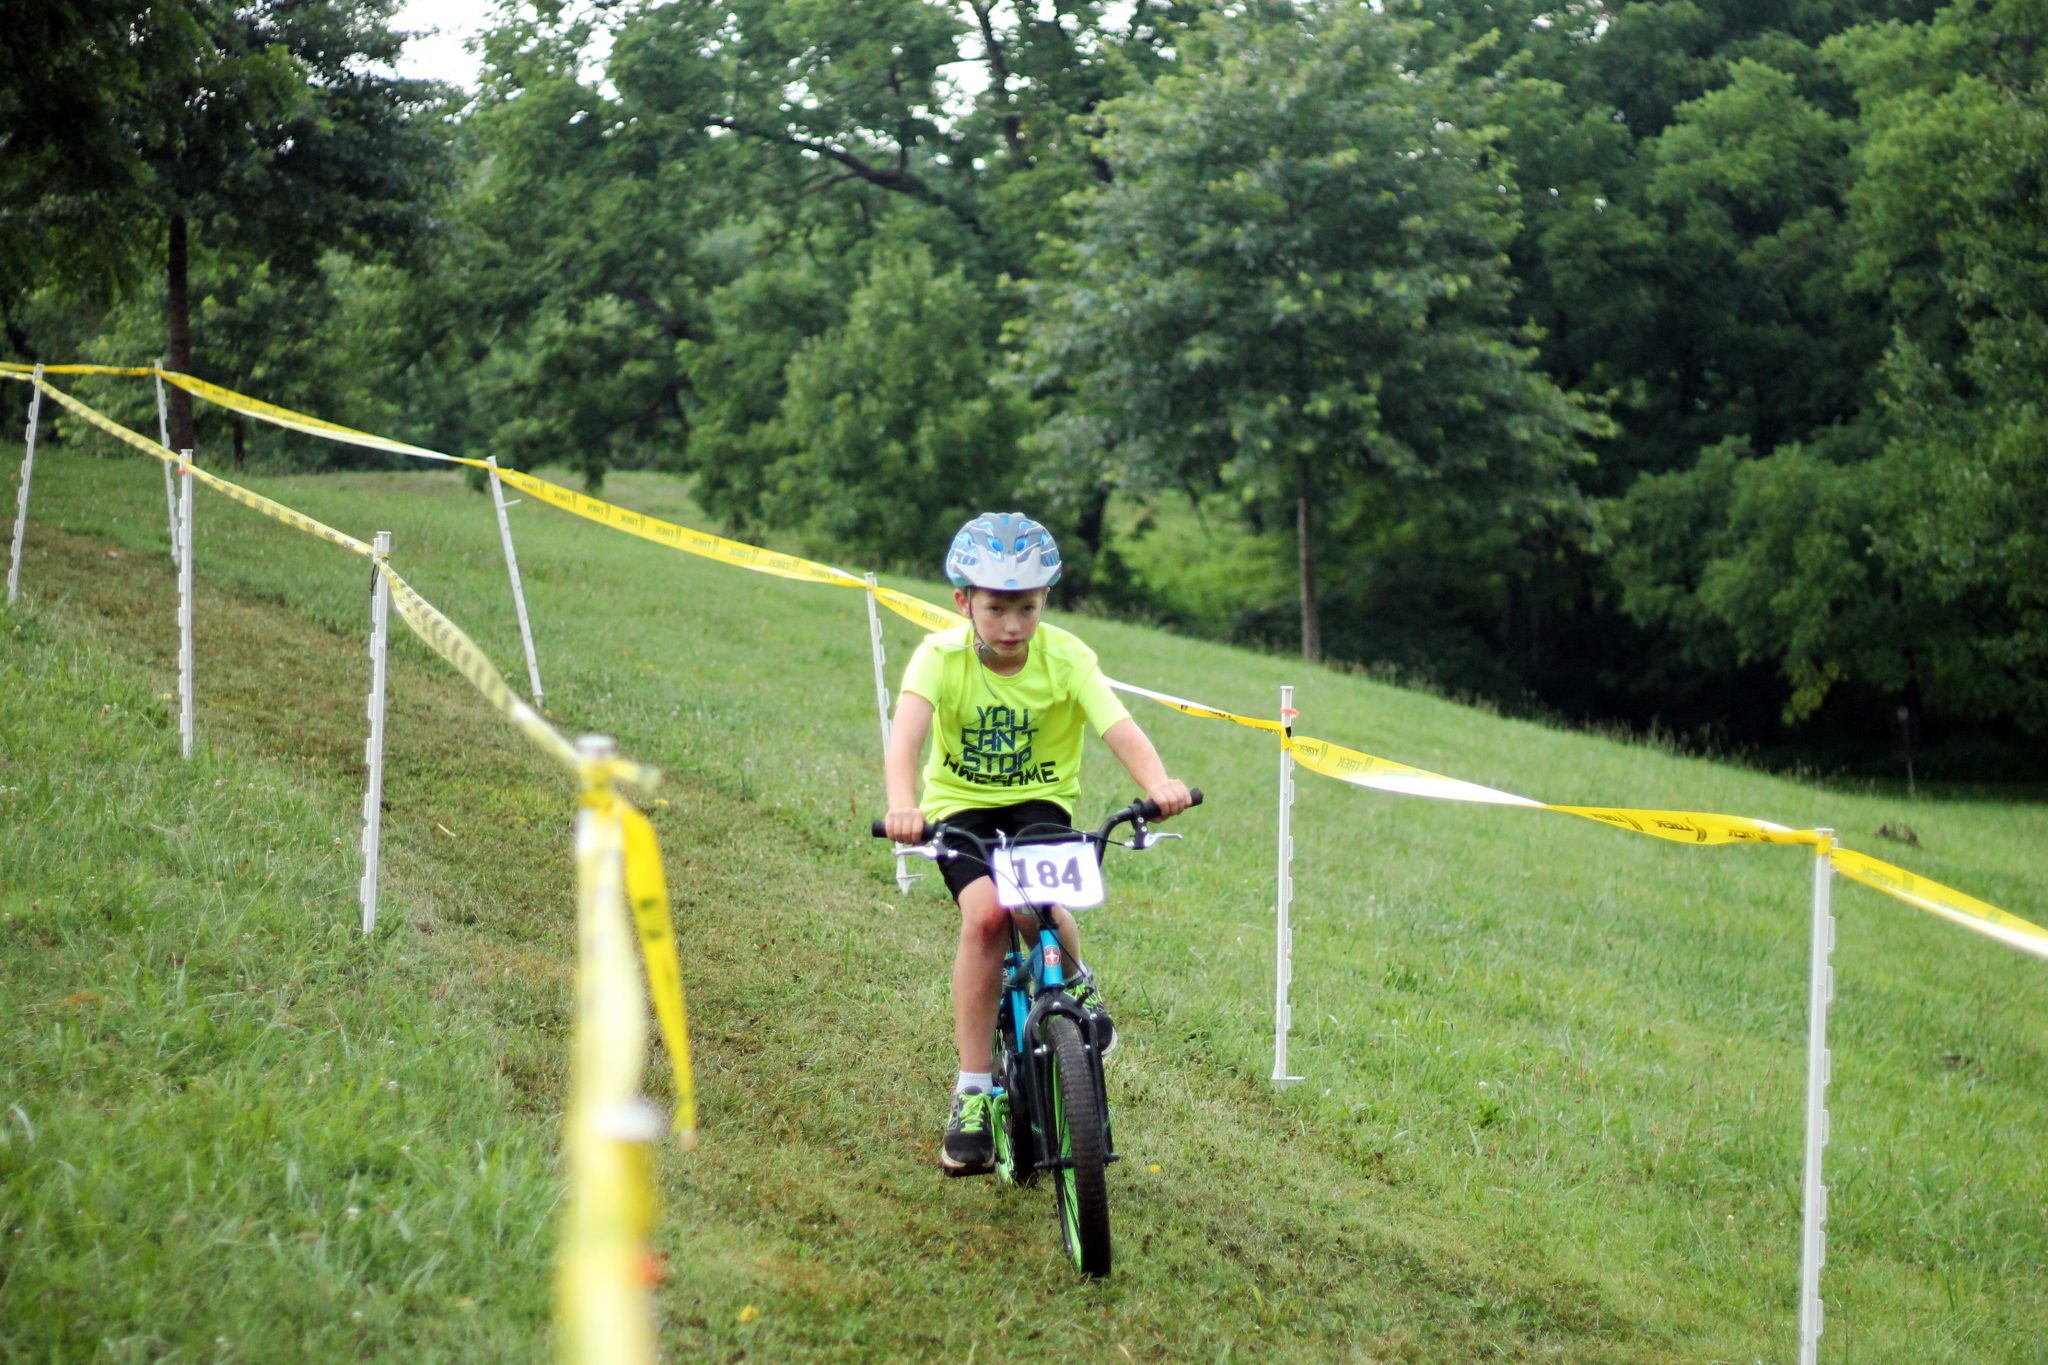 Fishburn youth mountain biker rides down hill